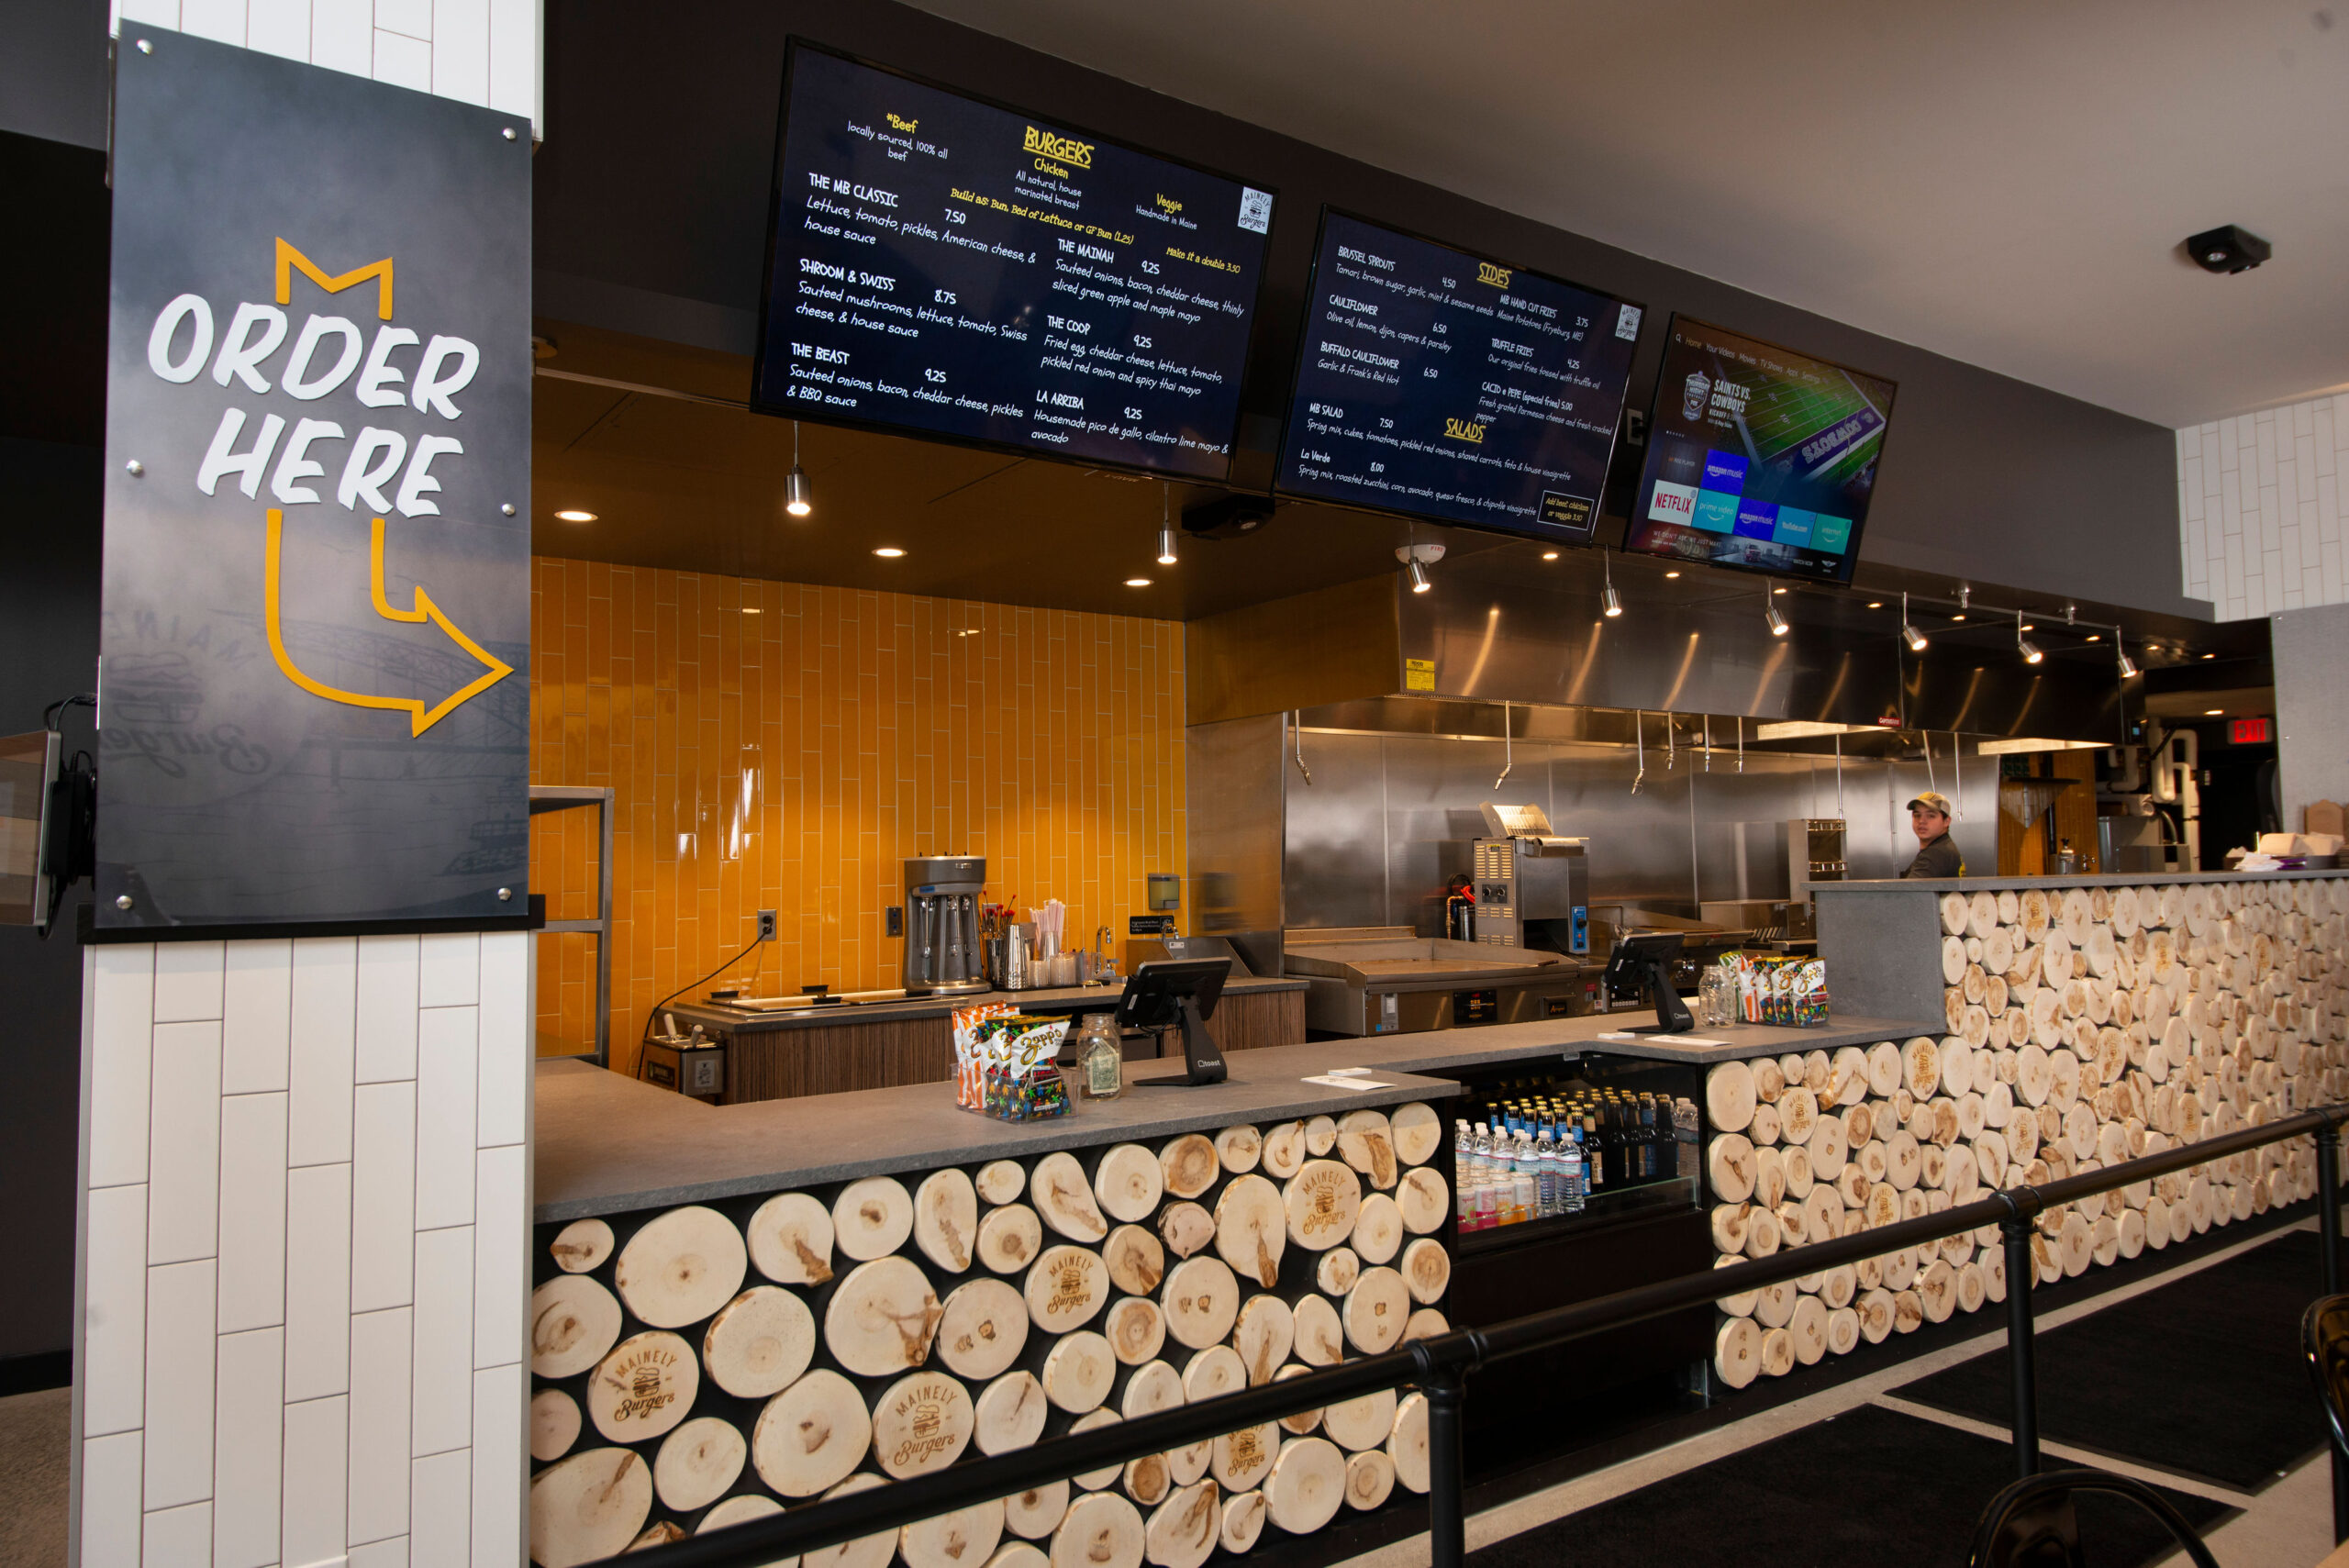 Fast Casual Burger restaurant interior design with wood wall decor, menu, cashier